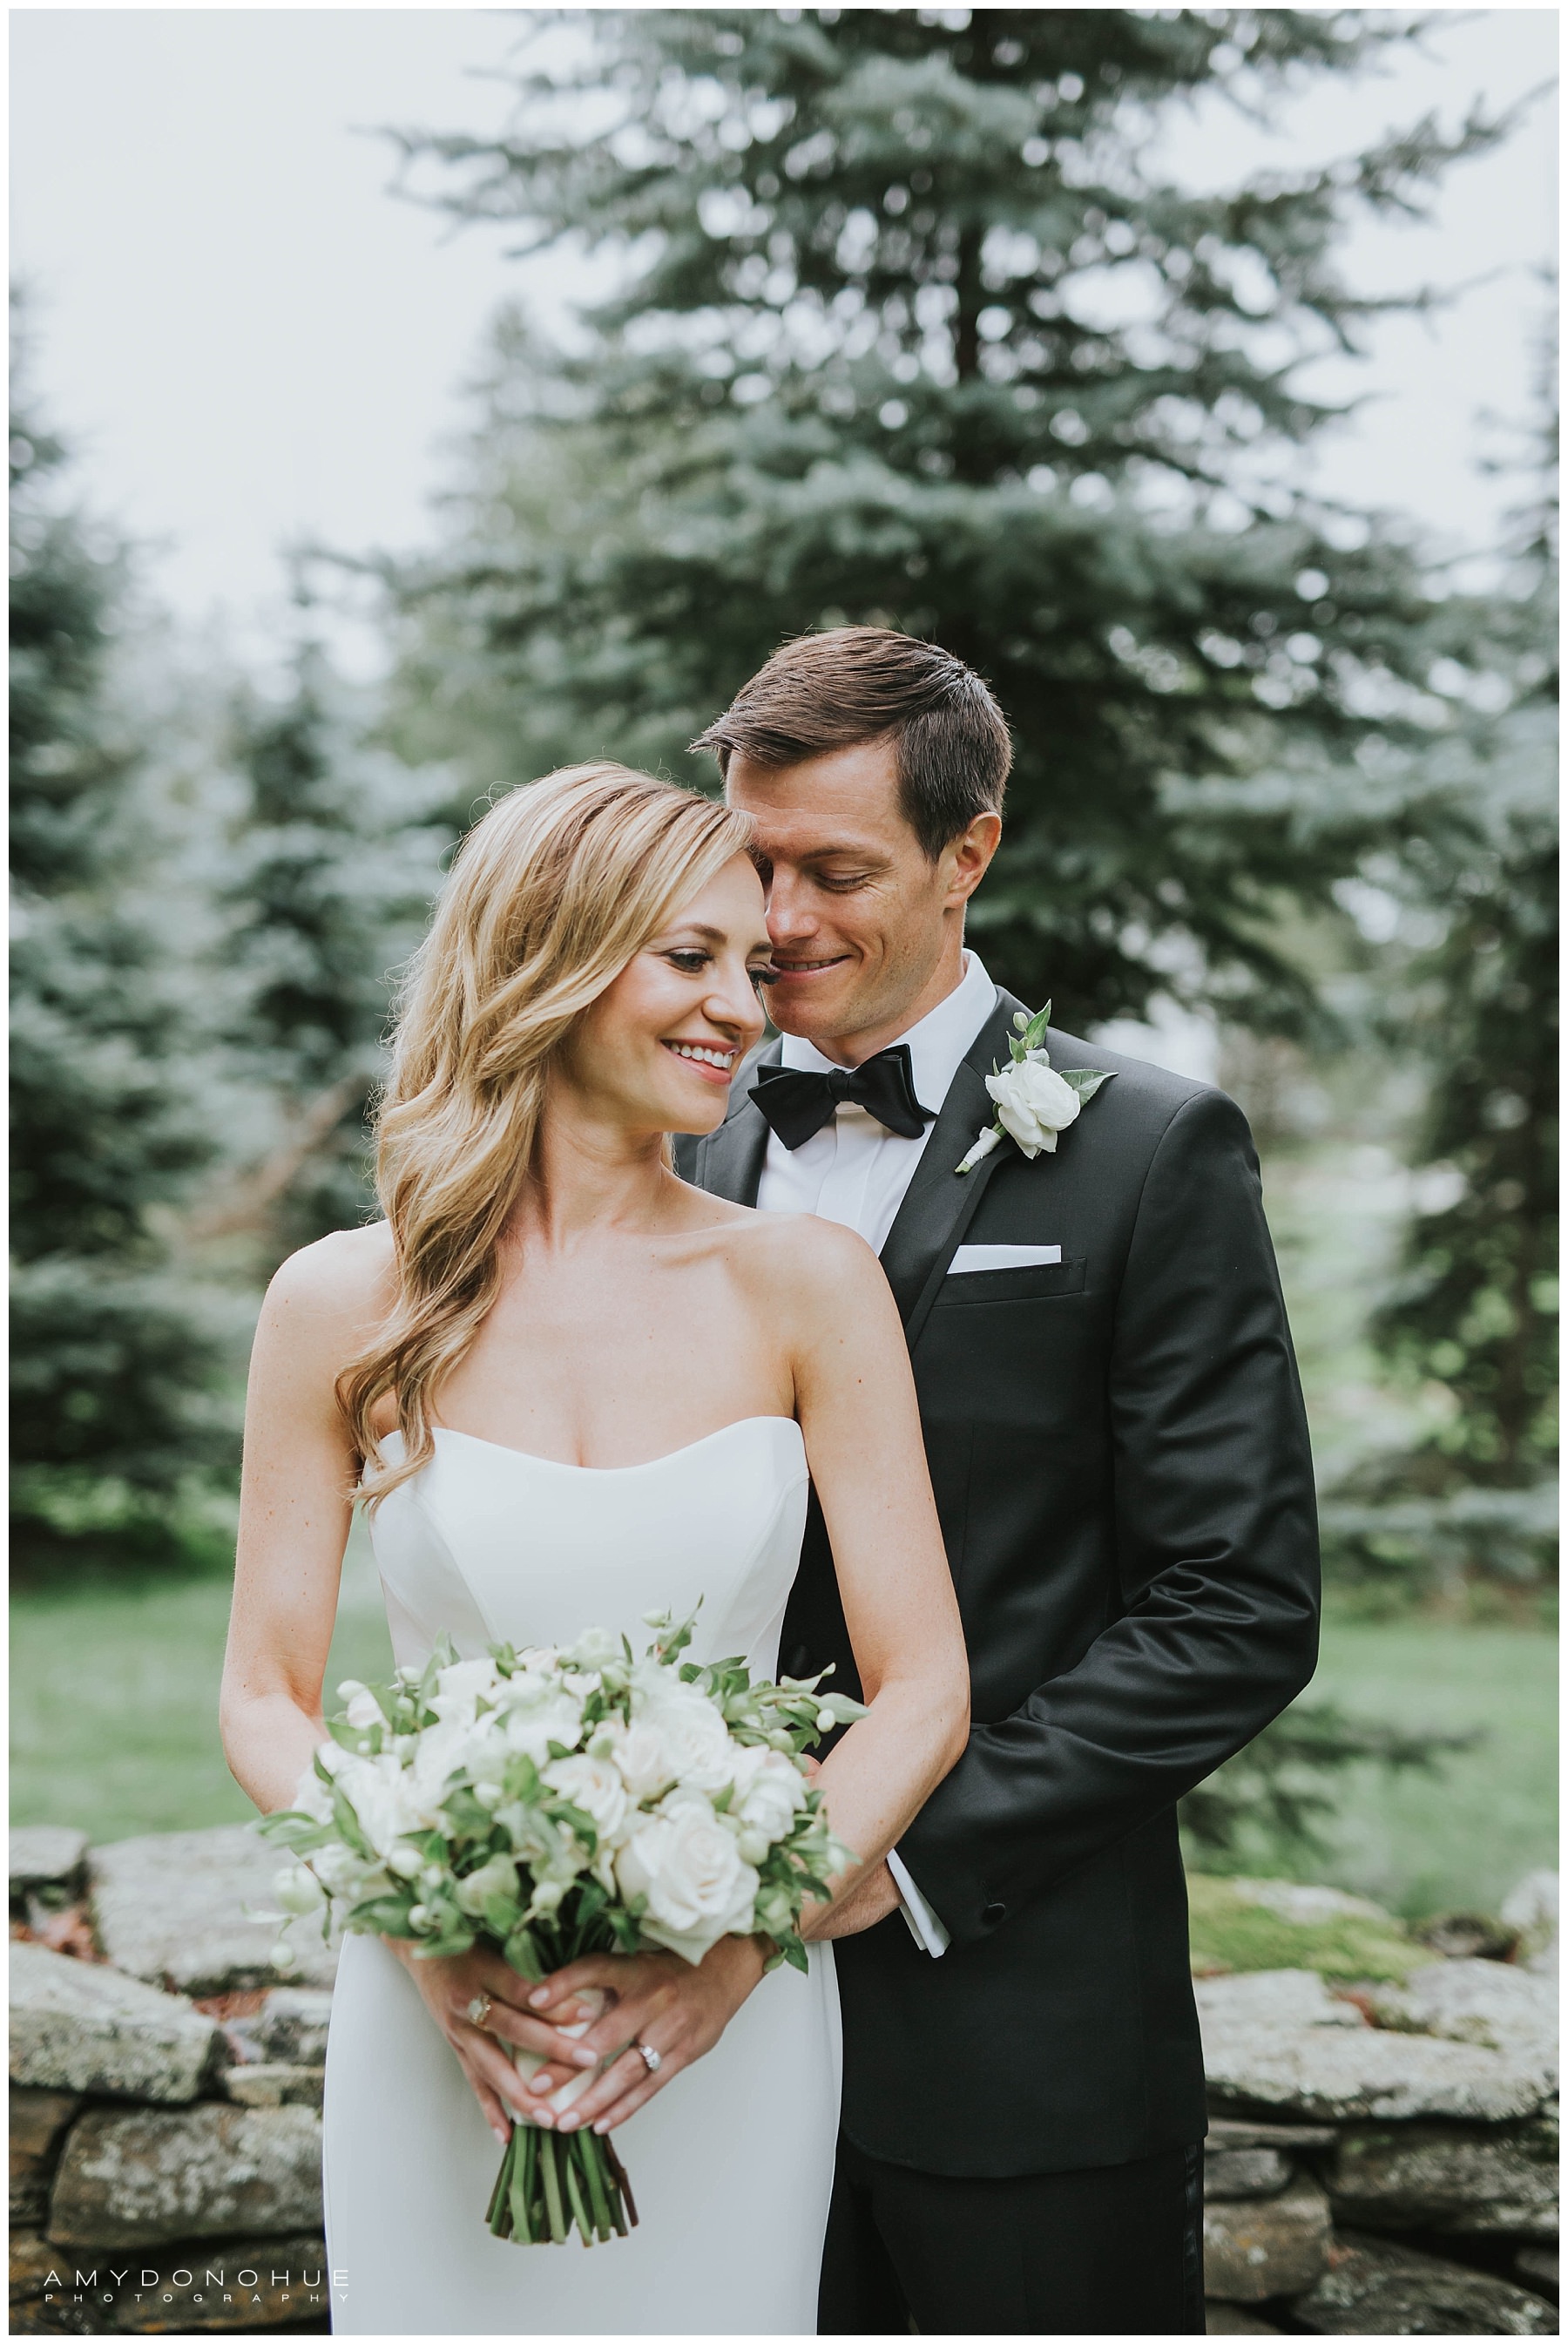 Bride and Groom Photos | © Amy Donohue Photography | Woodstock, Vermont Wedding Photographer